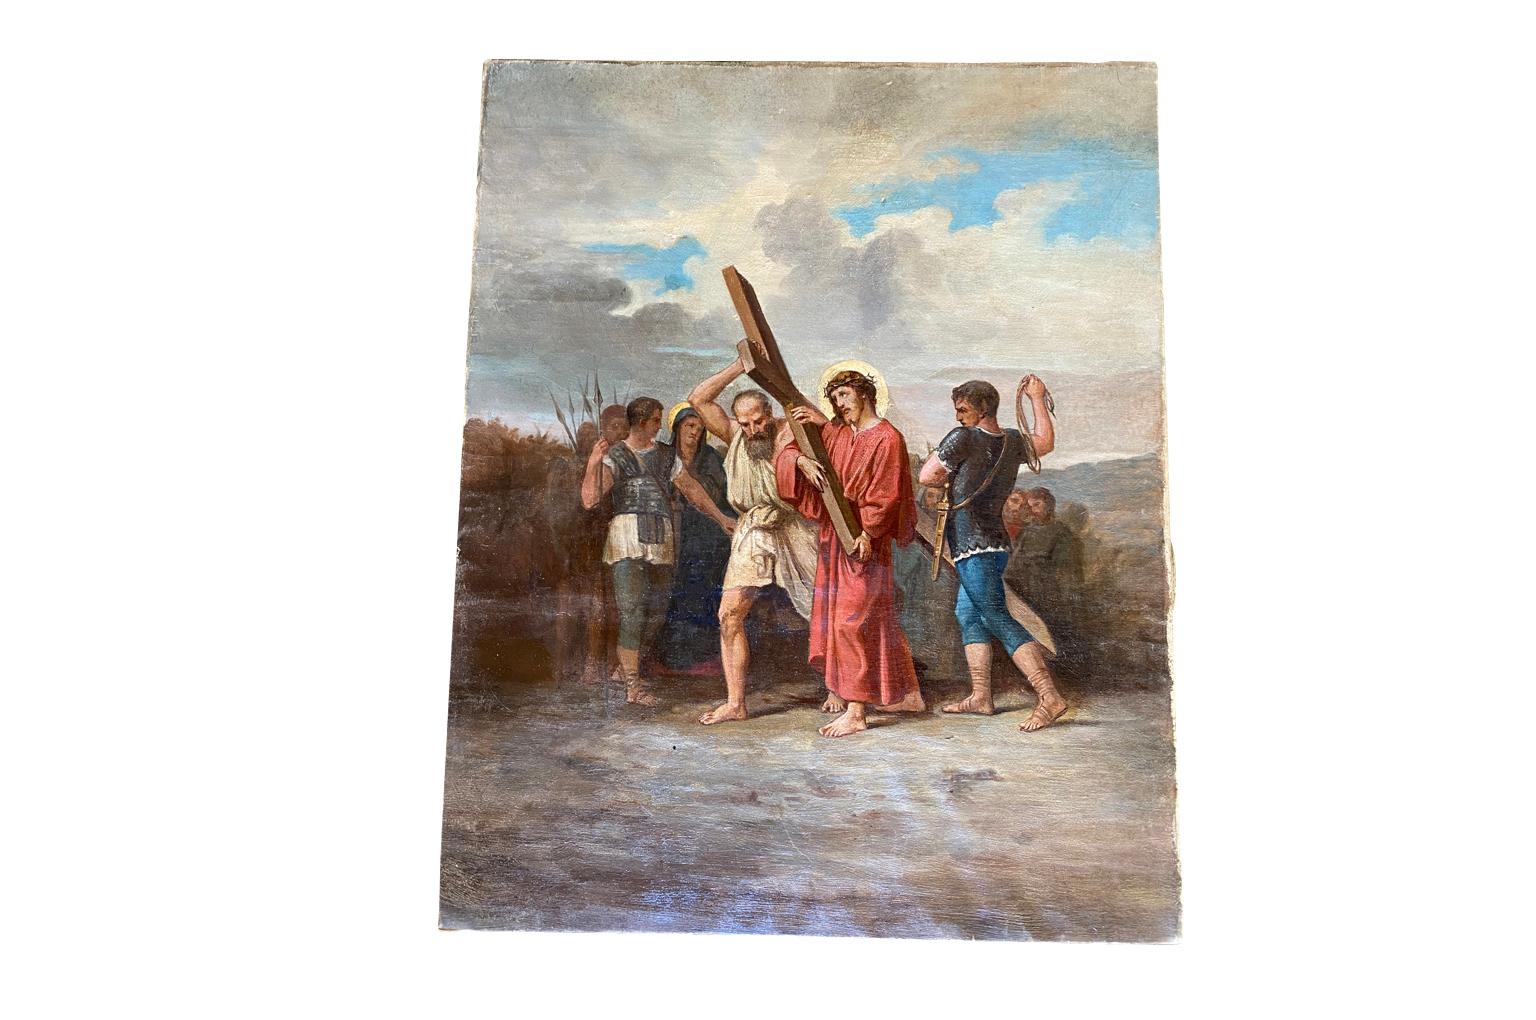 Ölgemälde auf Leinwand, Staions Of The Cross, spätes 19. Jahrhundert 2